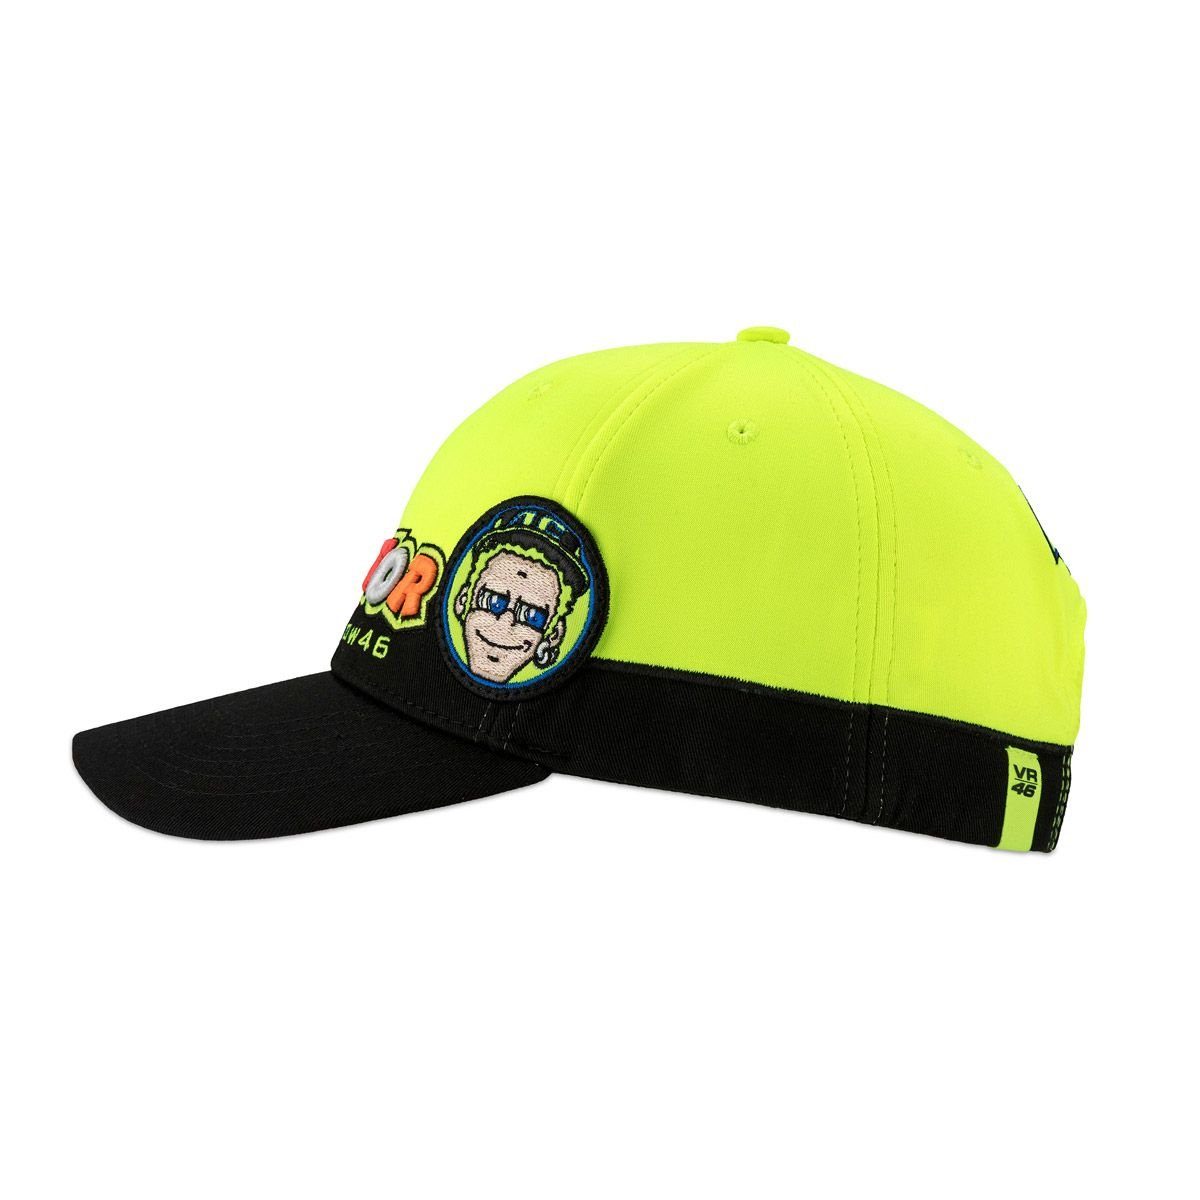 Baseball Größenverstellbar Cap (Schwarz/Neon-Gelb) VR46 Rossi Cupolino Valentino